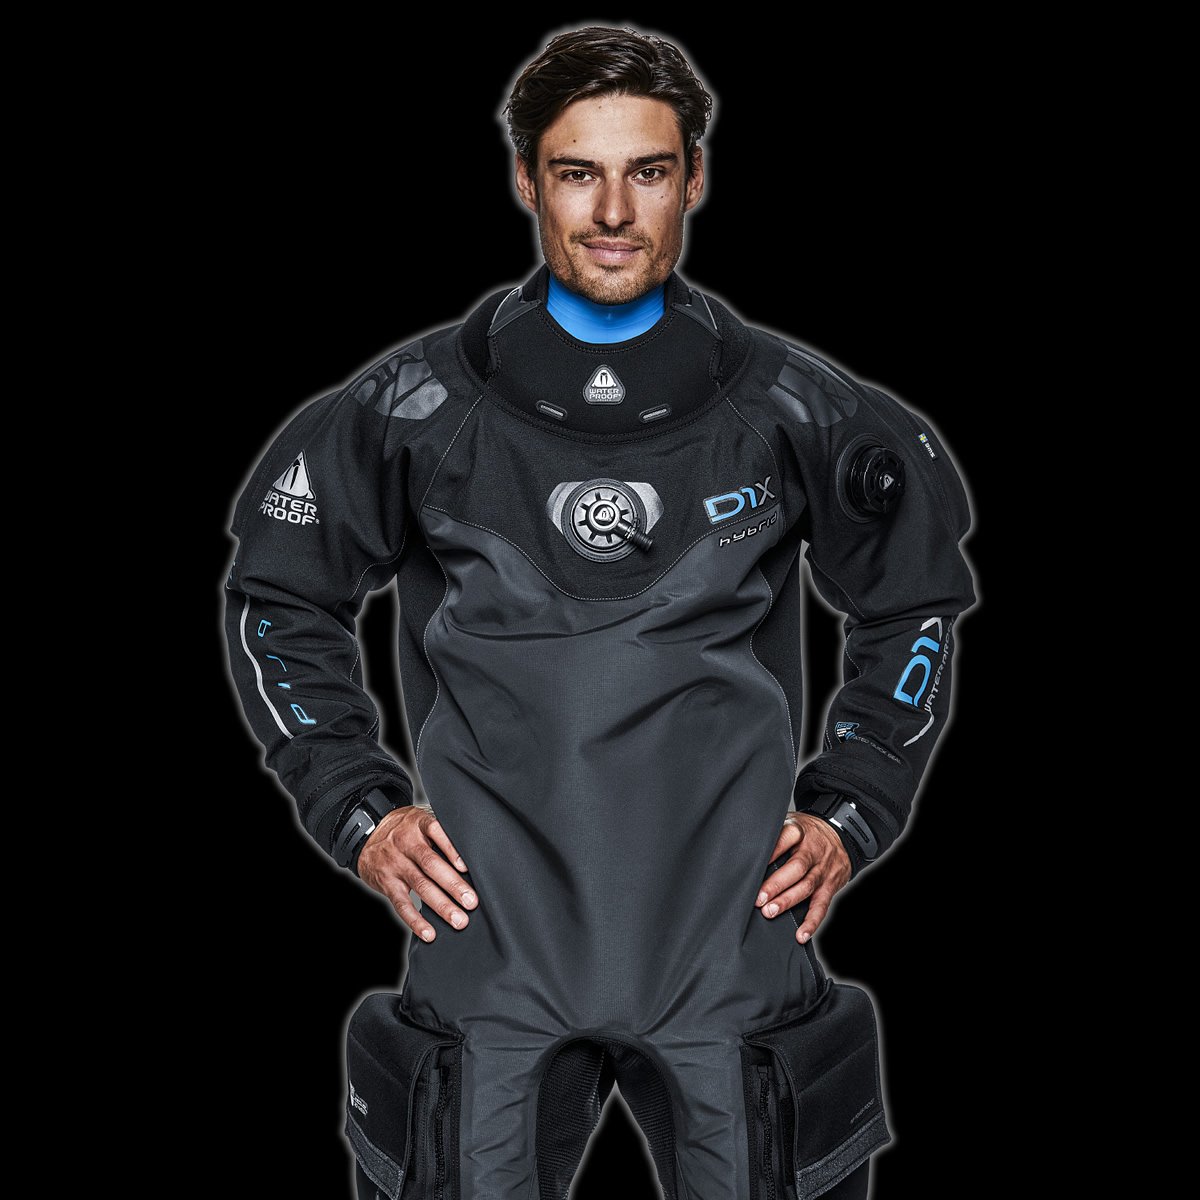 Waterproof Waterproof D1X Hybrid ISS Drysuit by Oyster Diving Shop